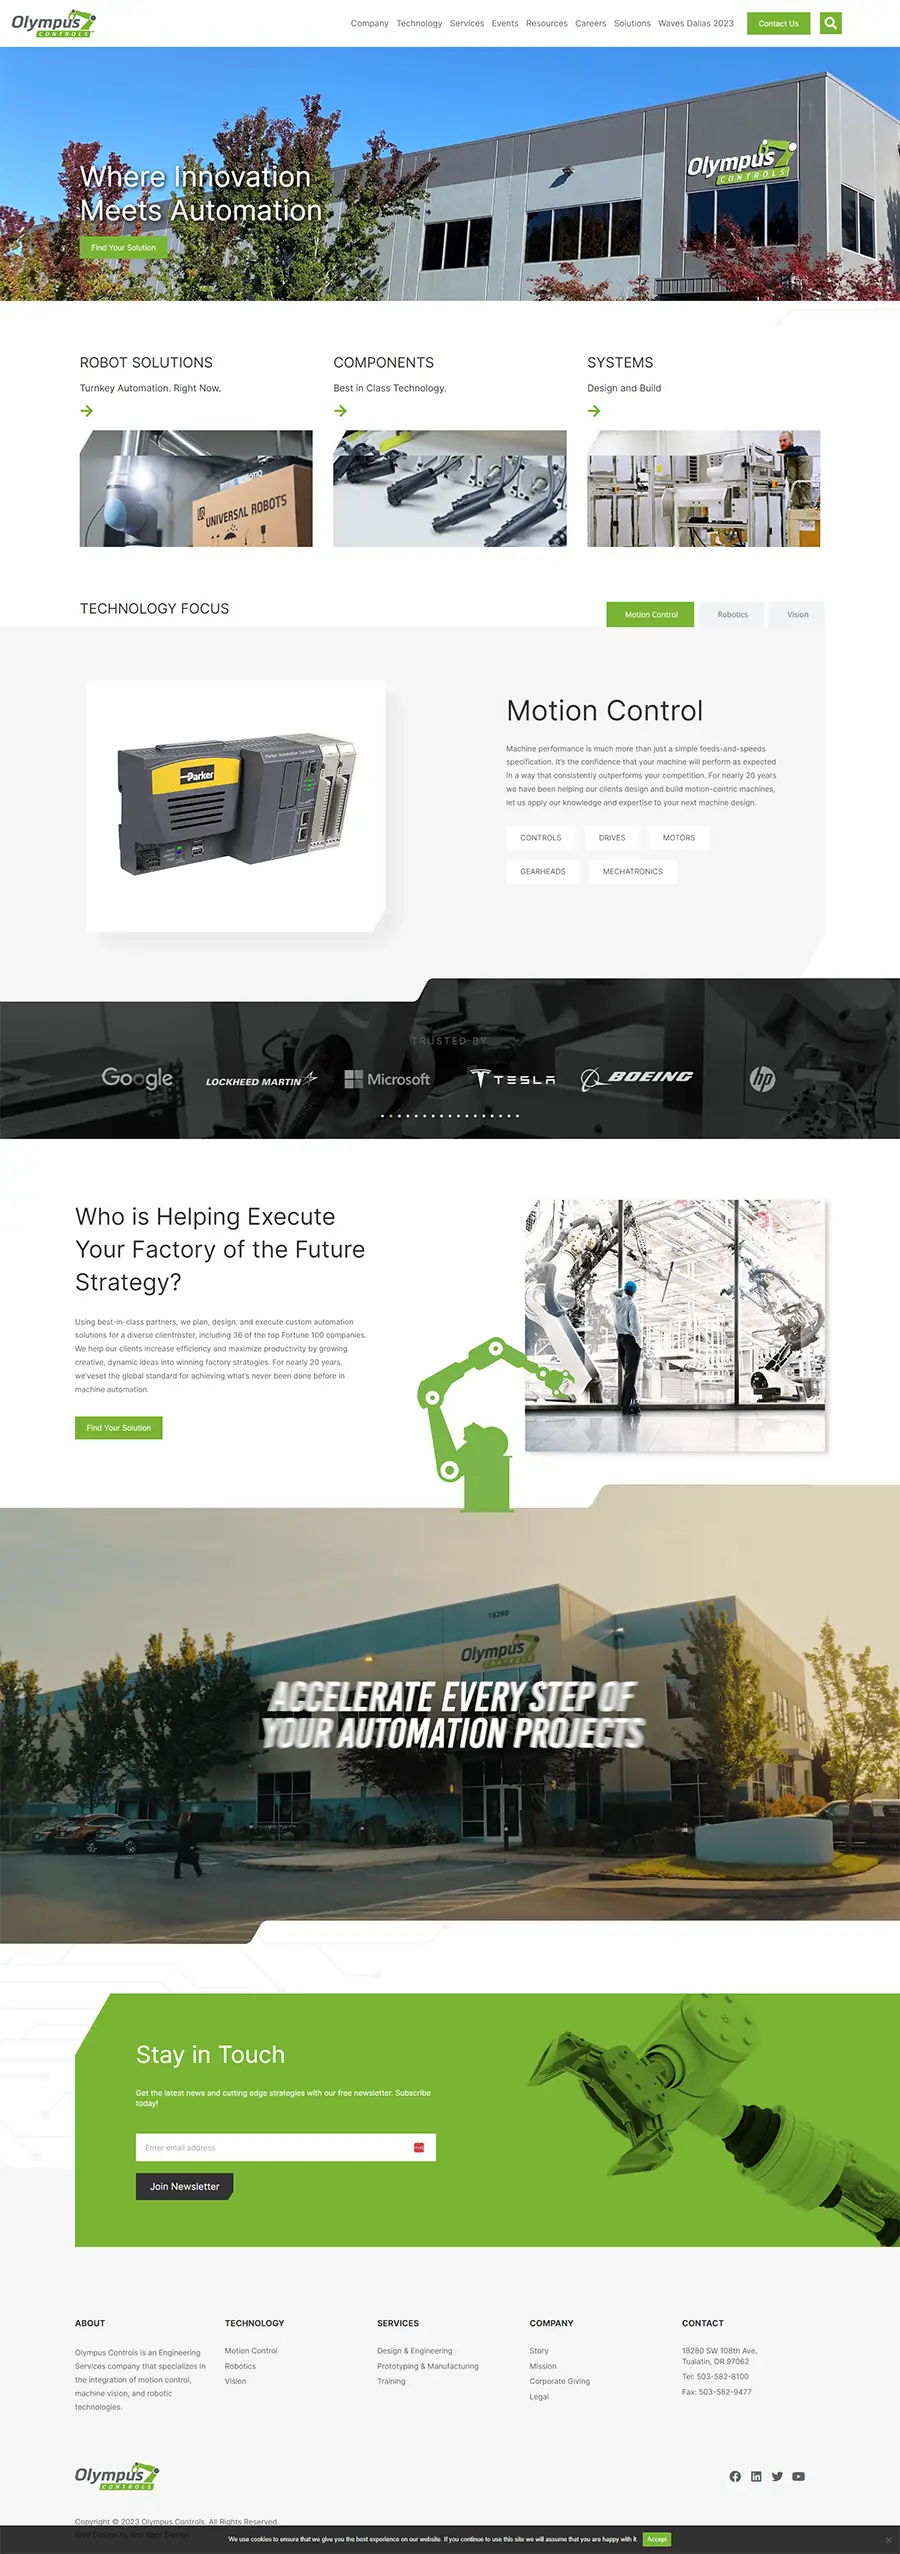 wordpress website design for robotics company